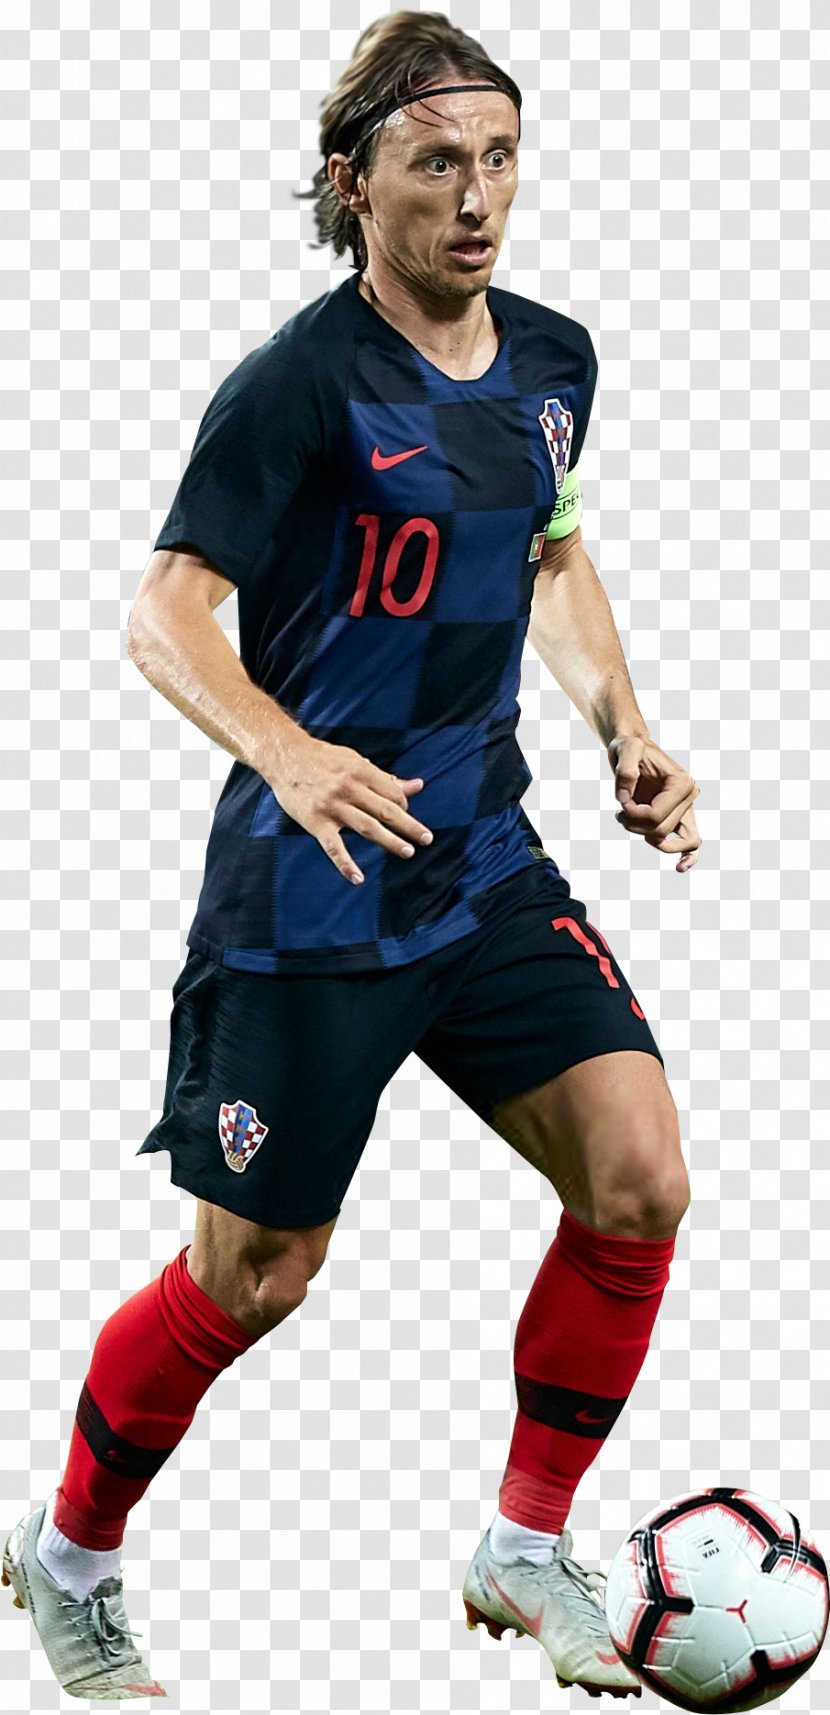 Croatia National Football Team UEFA Euro 2016 2018 World Cup Player - Tournament - Modric Graphic Transparent PNG